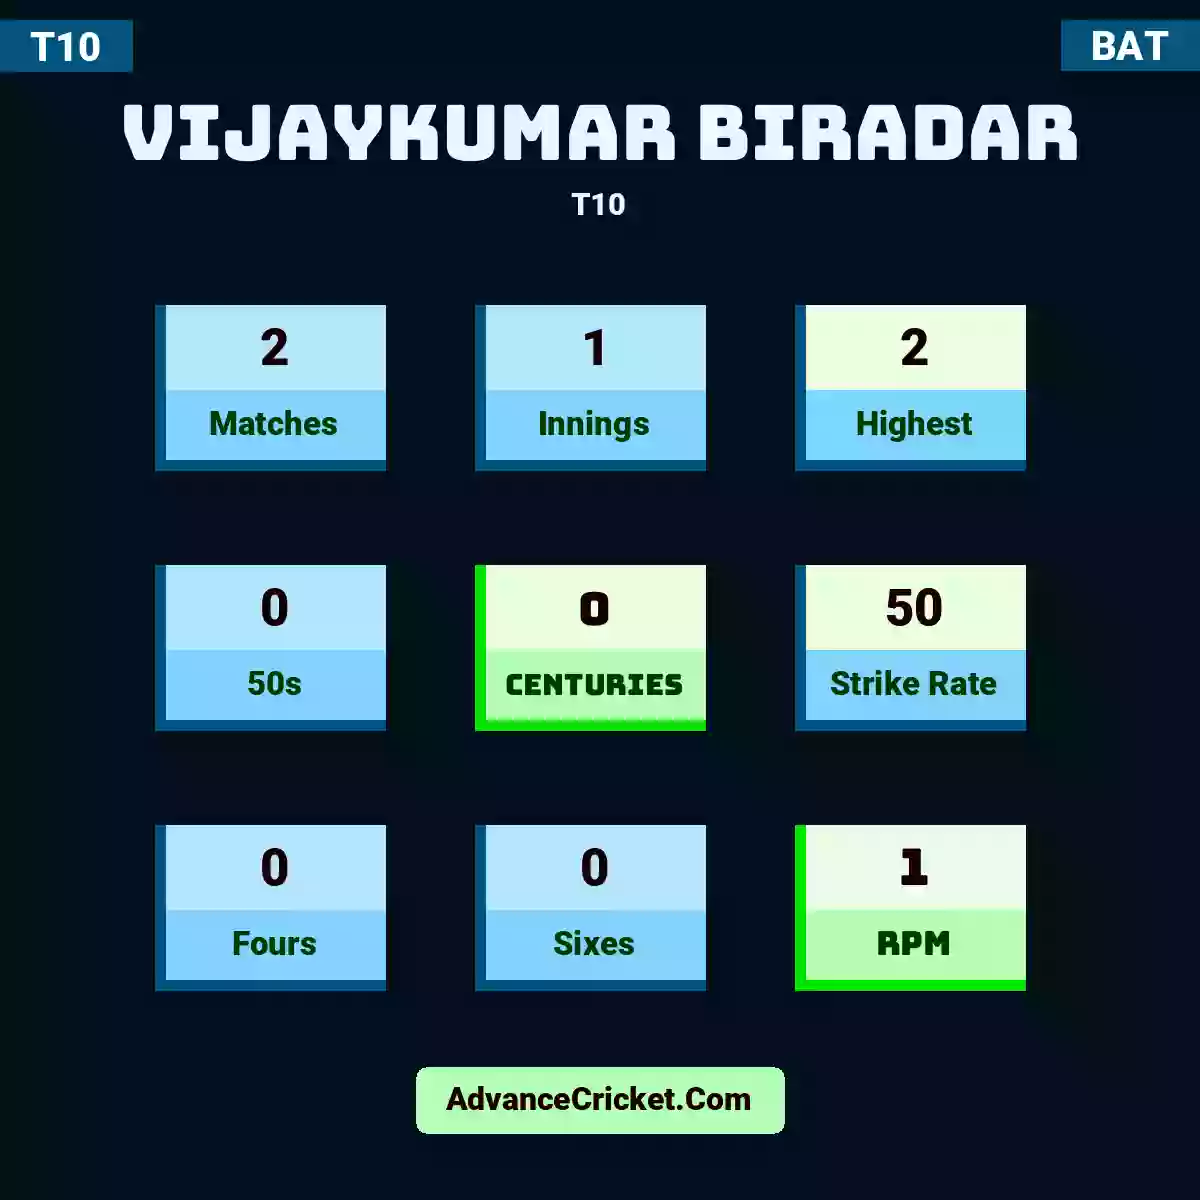 Vijaykumar Biradar T10 , Vijaykumar Biradar played 2 matches, scored 2 runs as highest, 0 half-centuries, and 0 centuries, with a strike rate of 50. V.Biradar hit 0 fours and 0 sixes, with an RPM of 1.